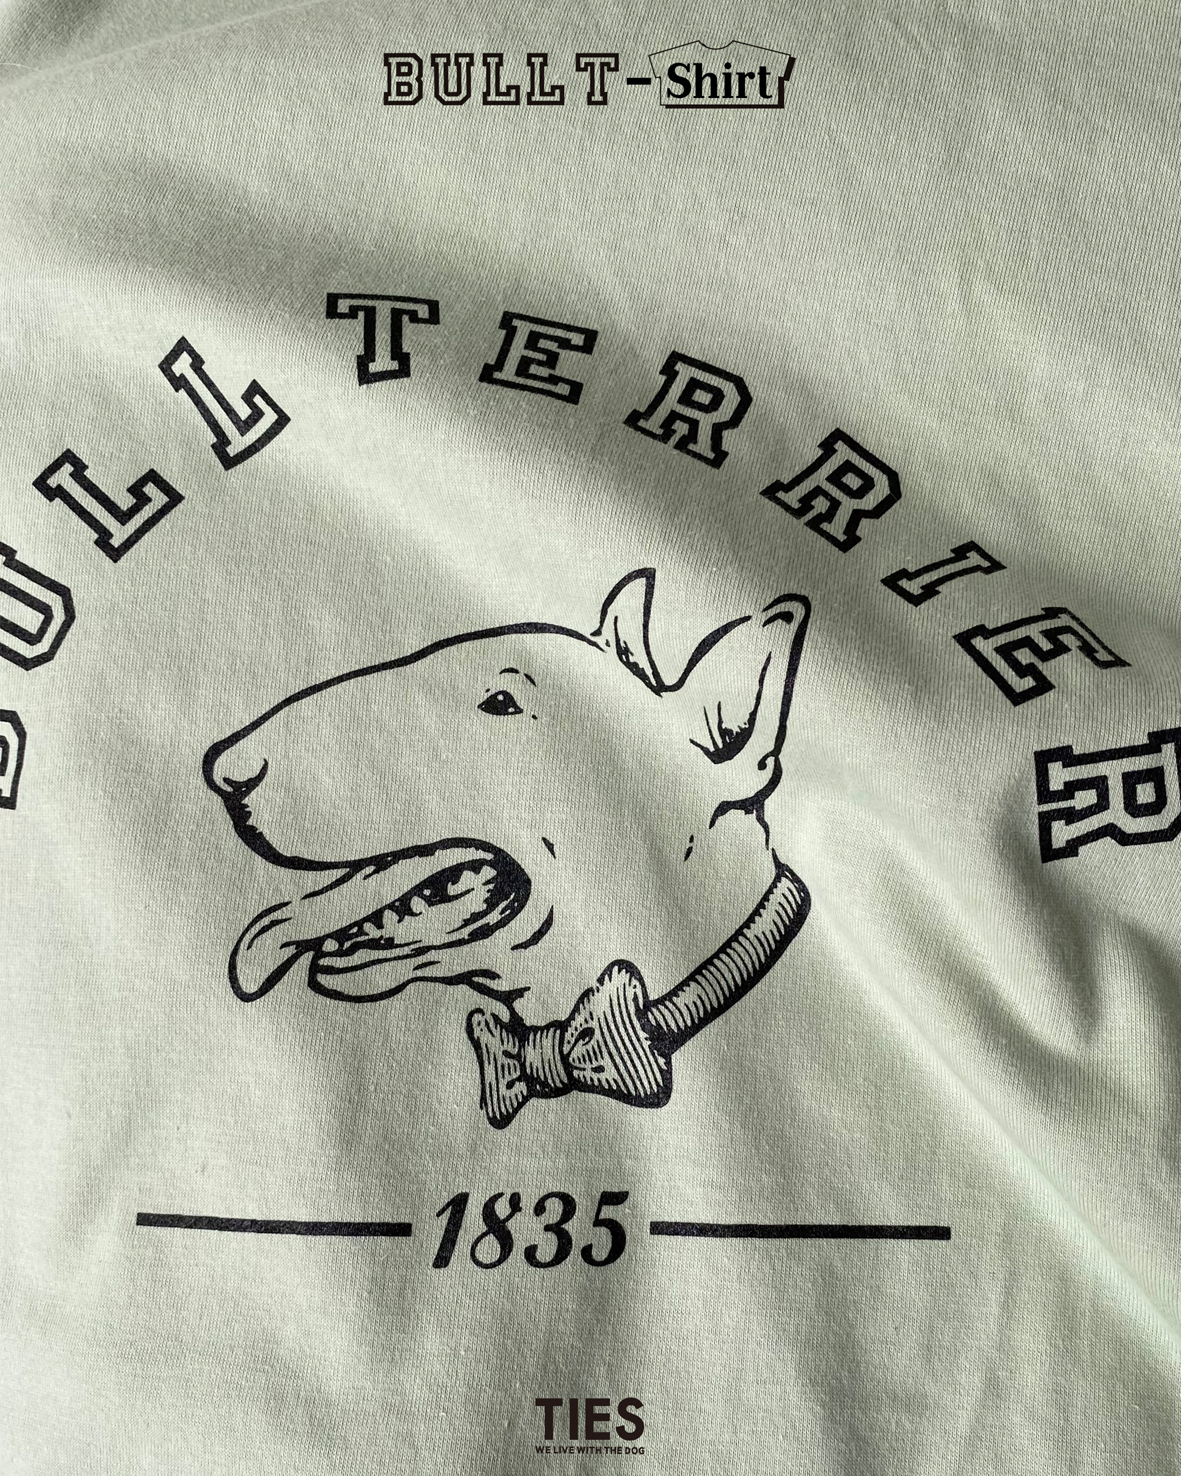 "BULL" T-shirt も27日（金曜日）の20時より発売よりスタート！